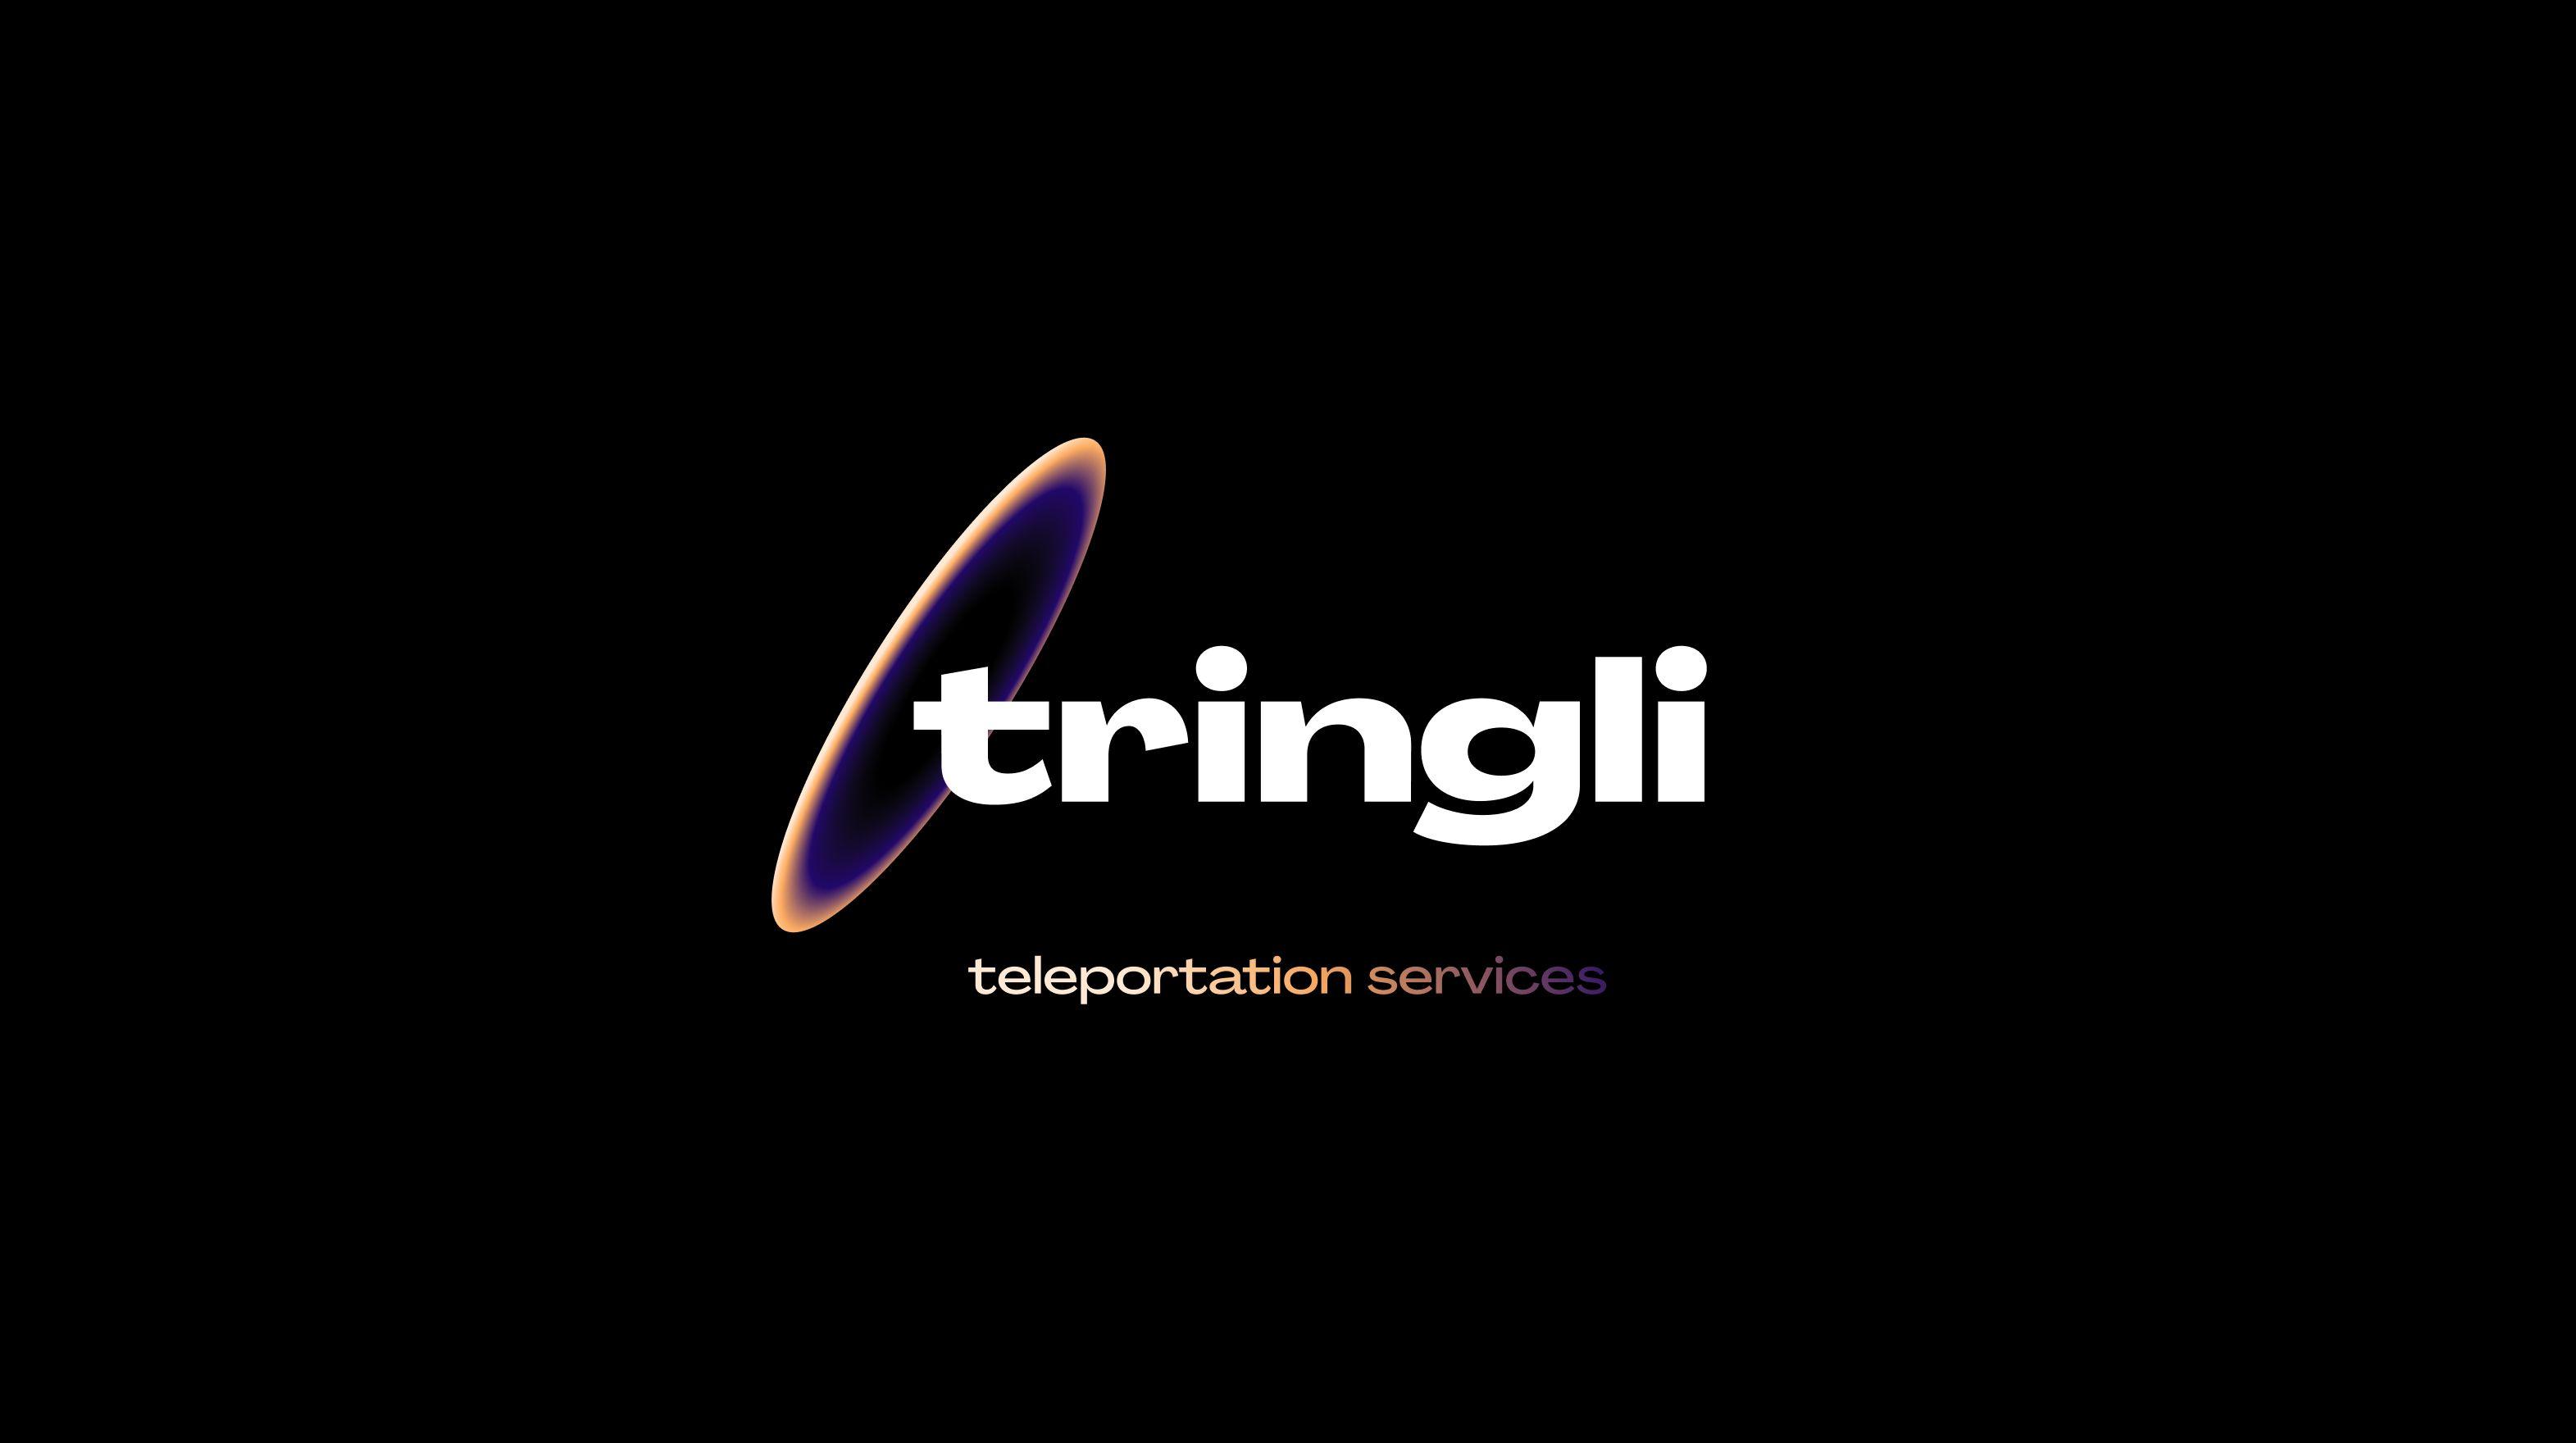 Tringli teleportation services